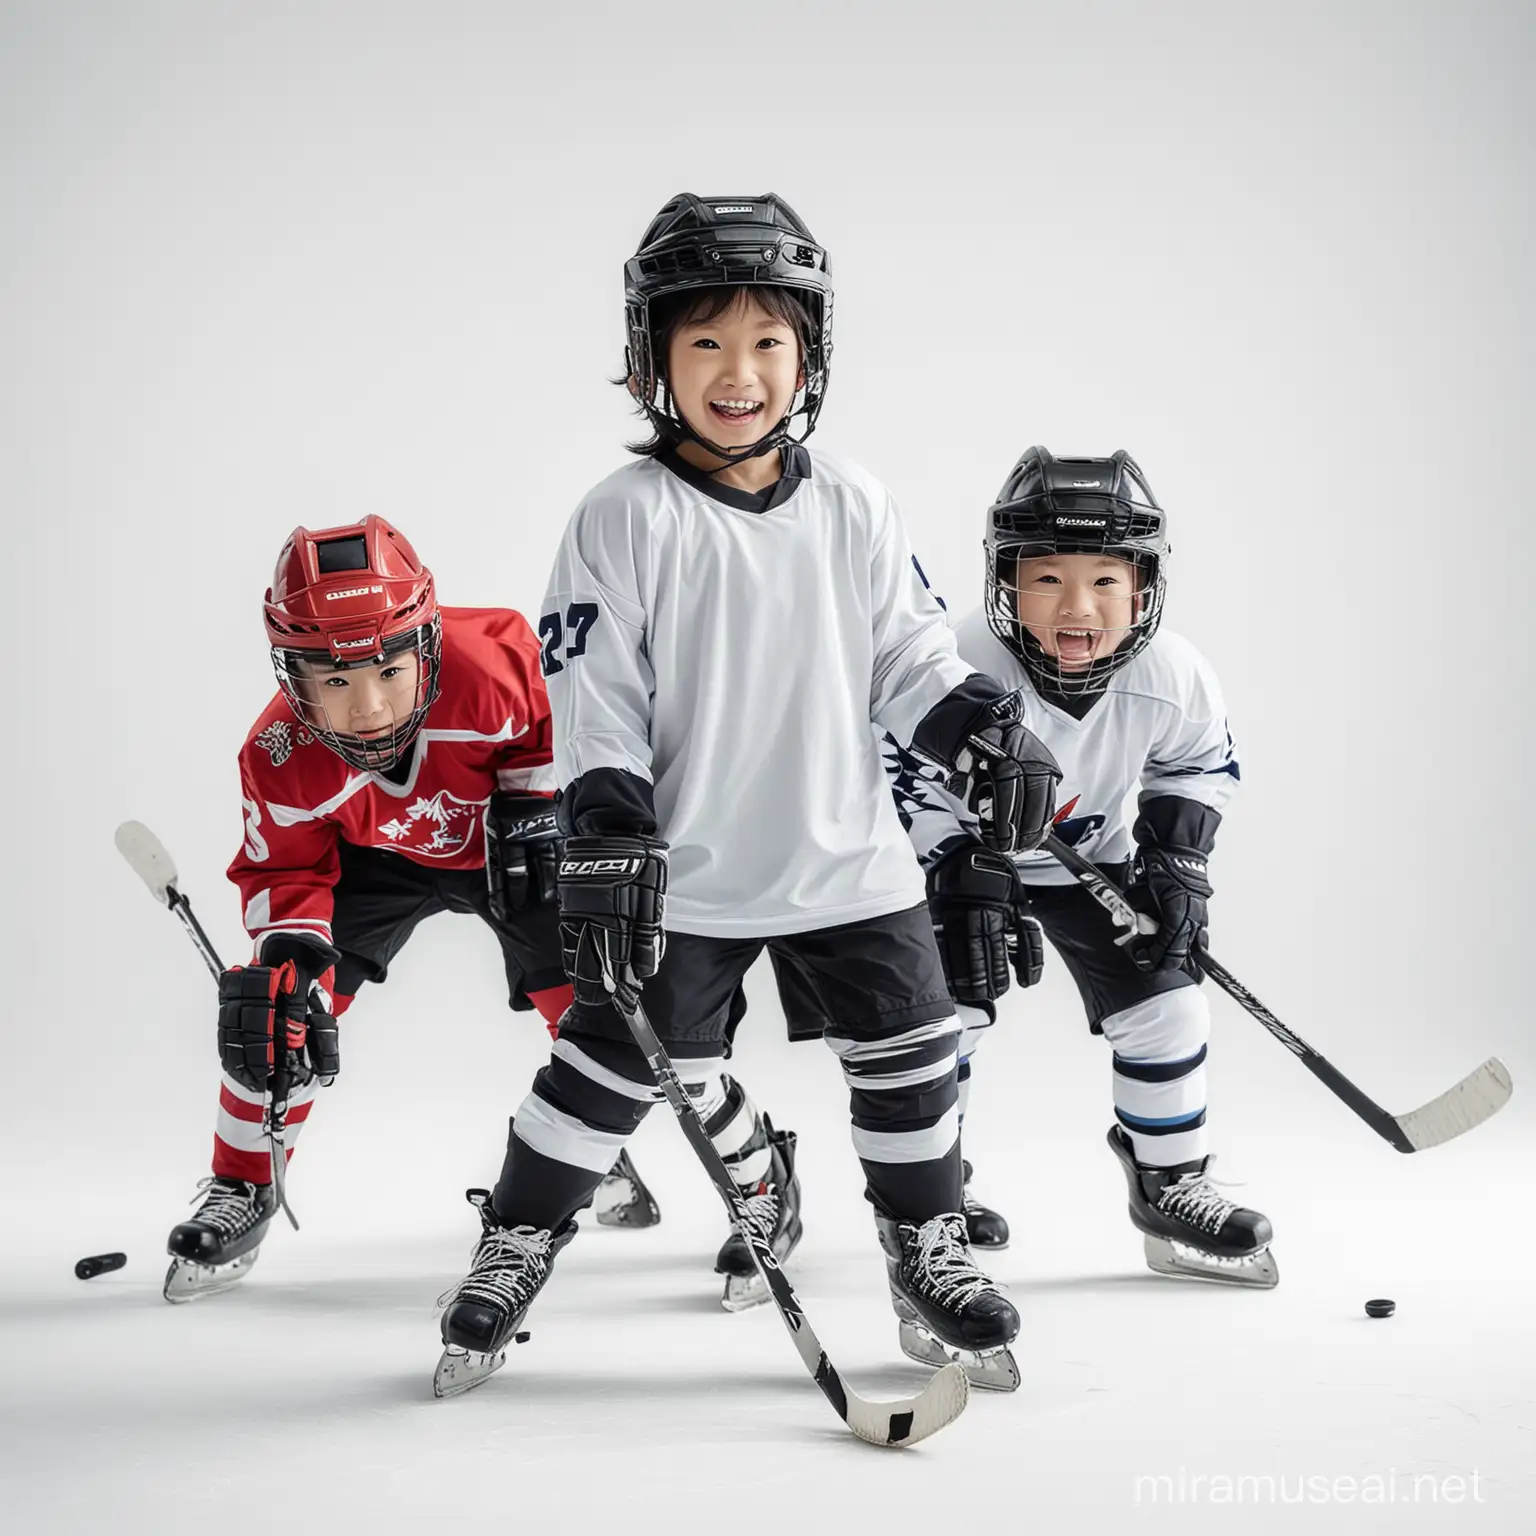 asia kids ice hockey white background
